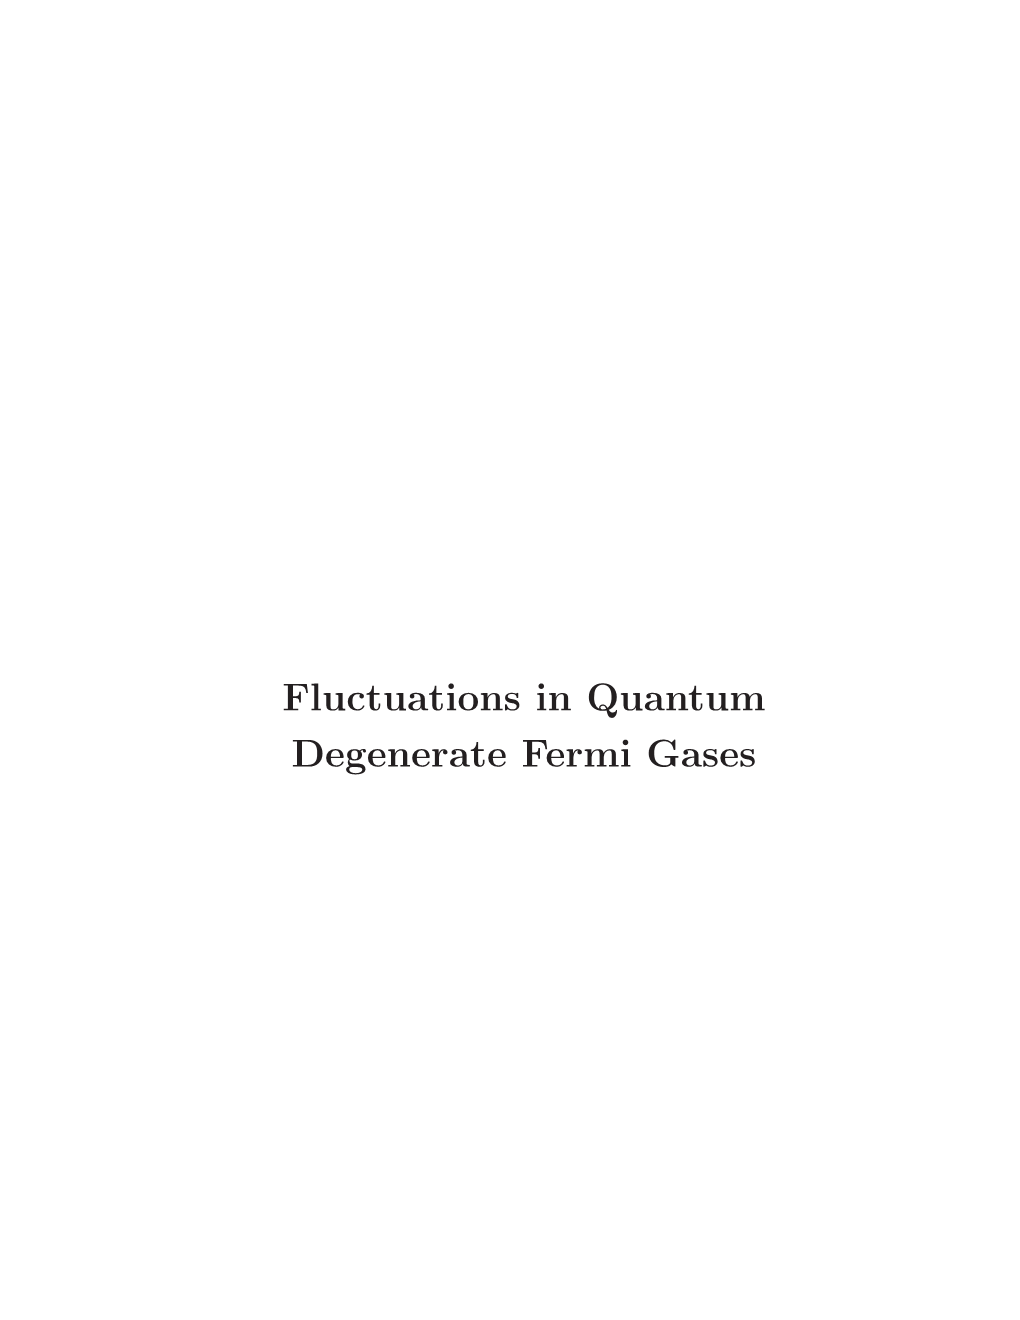 Fluctuations in Quantum Degenerate Fermi Gases Fluctuations in Quantum Degenerate Fermi Gases by Christian Sanner